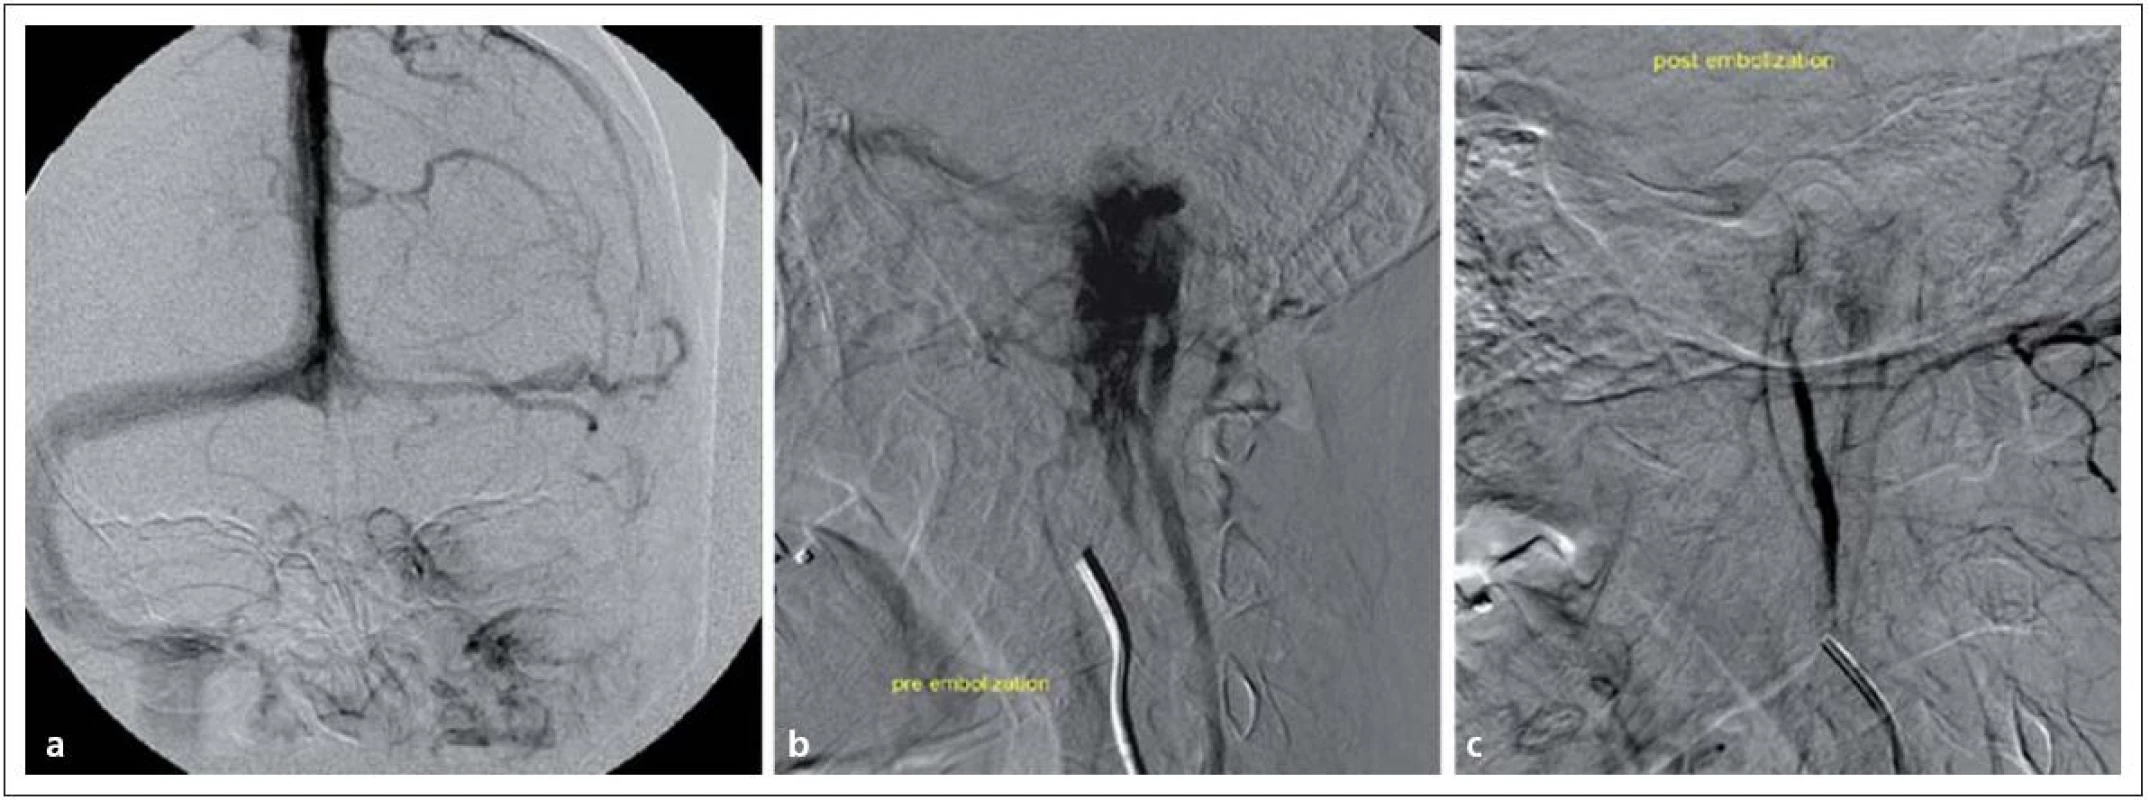 Tumor glomus jugulare vlevo v zobrazení DSA.
Obr. 9a) Obliterace sinus sigmoideus vlevo.
Obr. 9b) Extrémní hypervaskularizace tumoru glomus jugulare.
Obr. 9c) Příznivý stav po embolizaci nádoru.